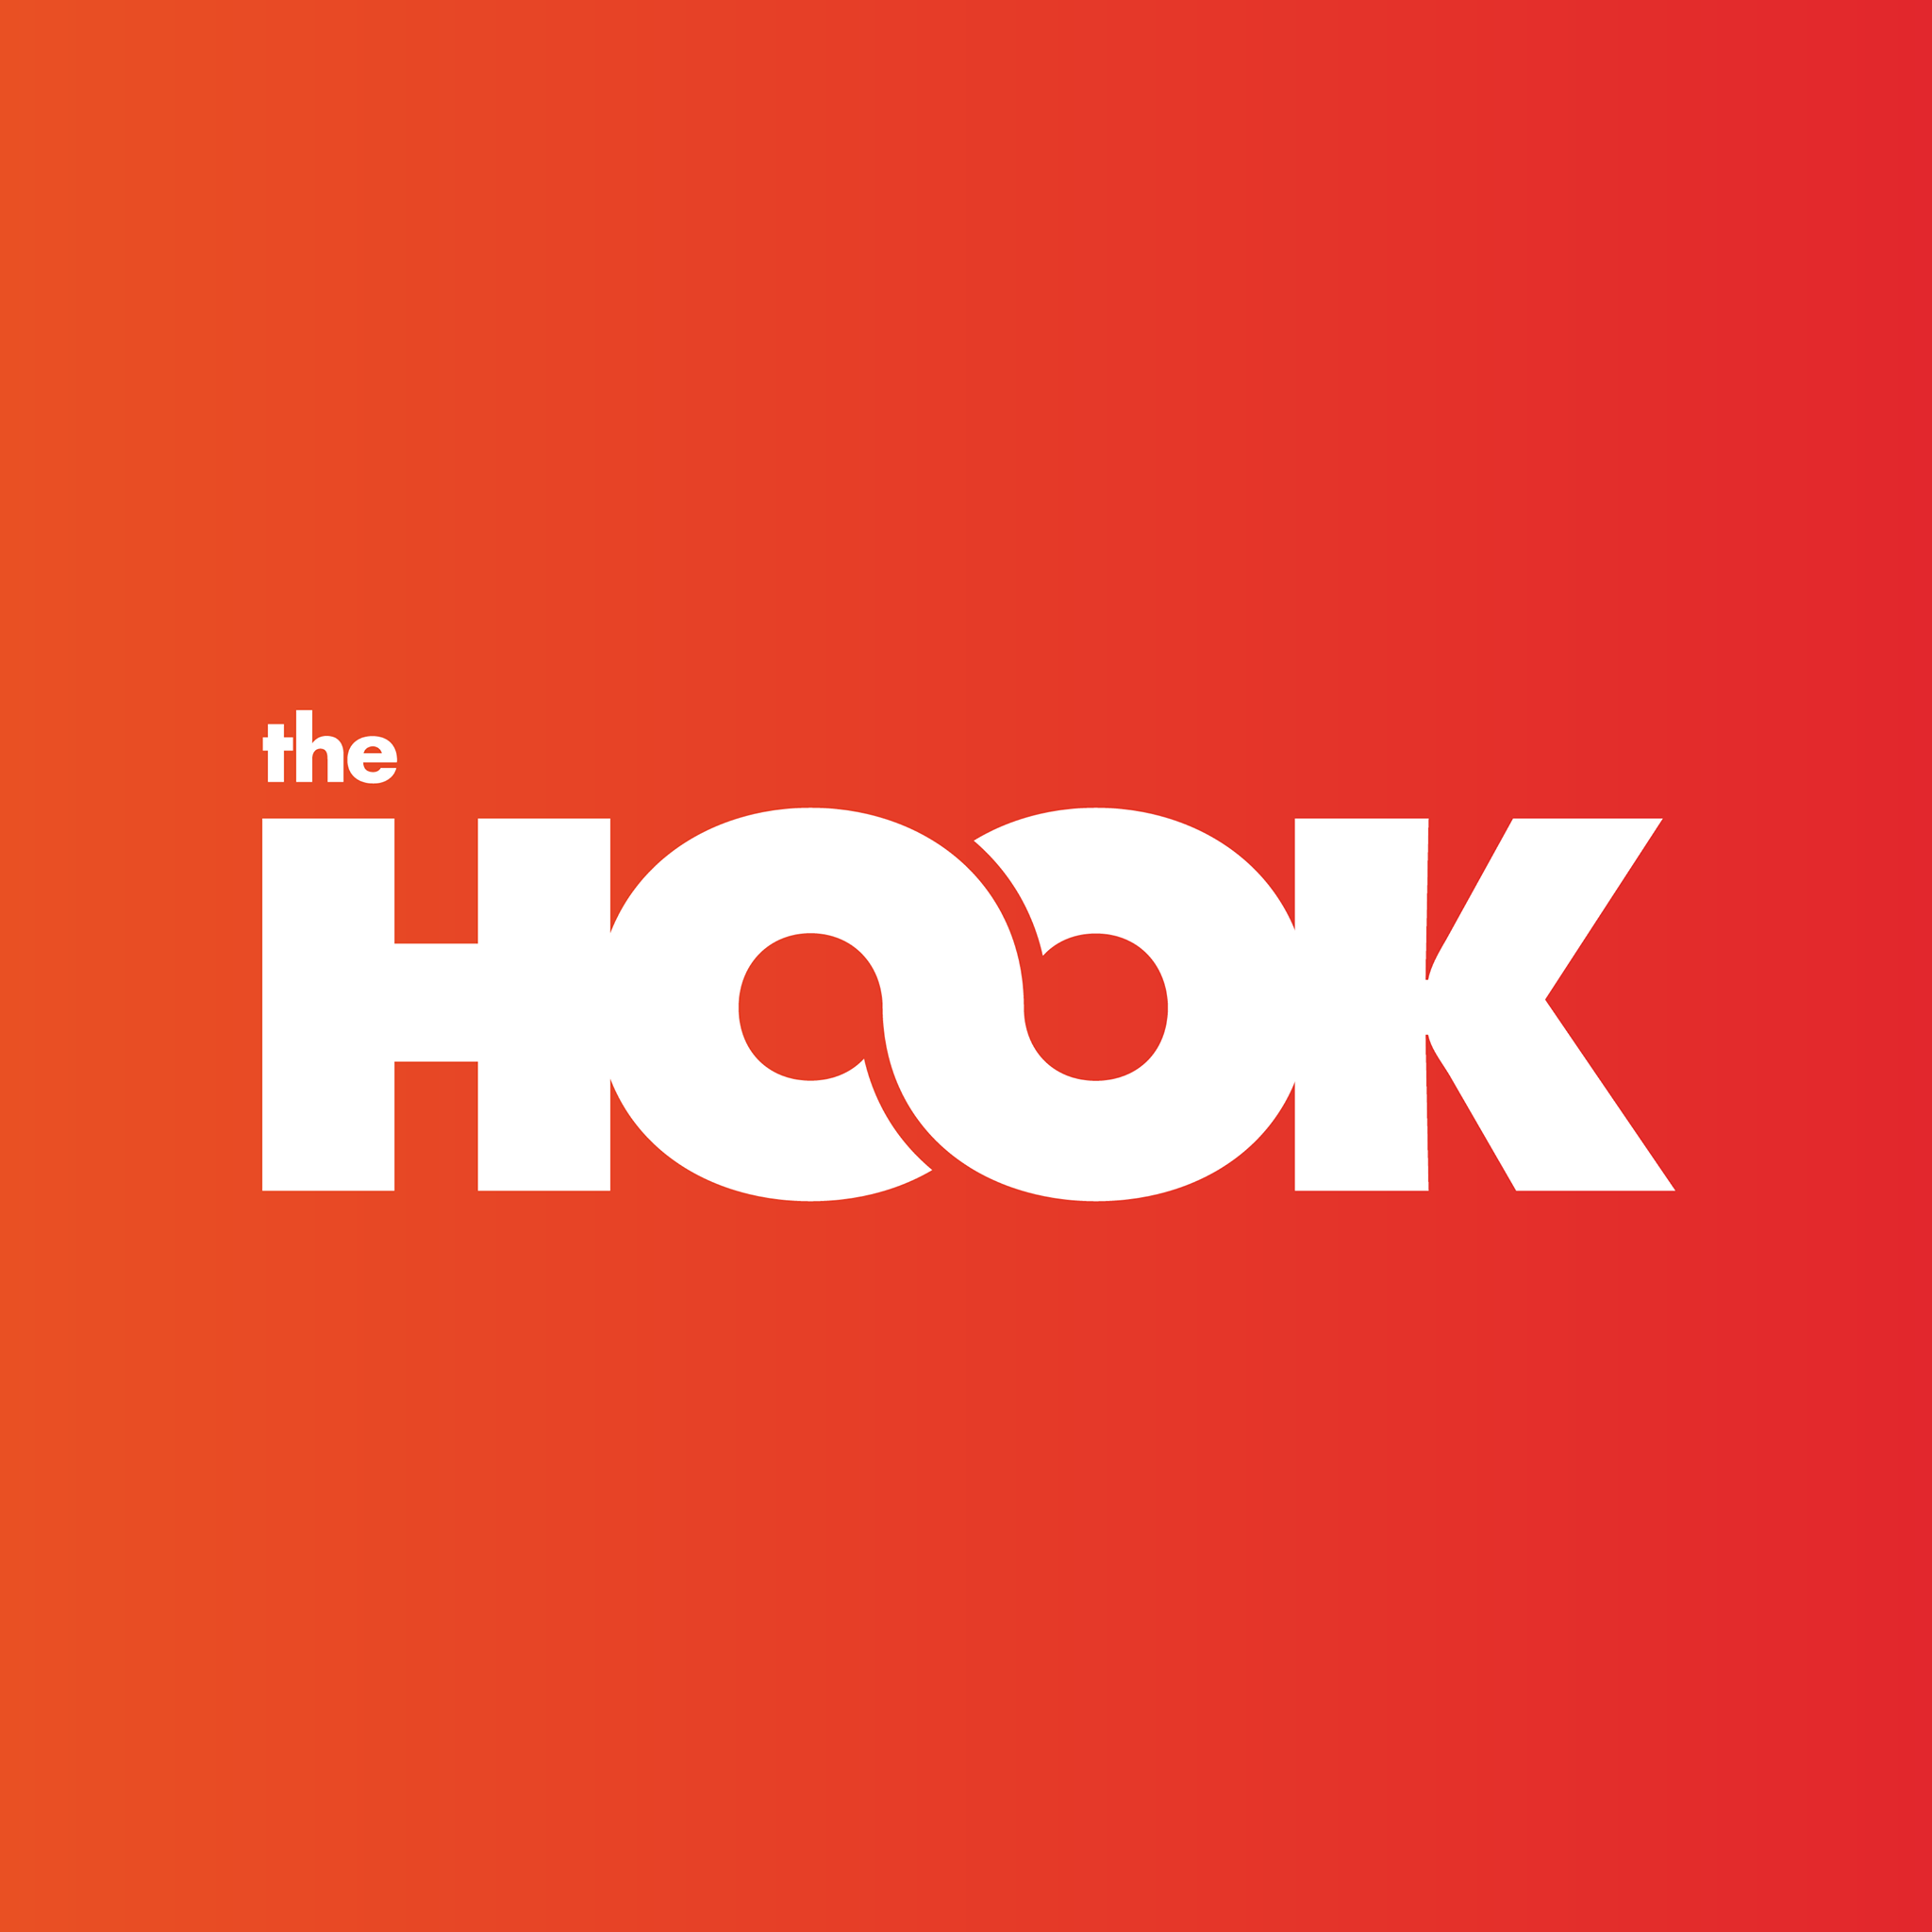 The Hook news